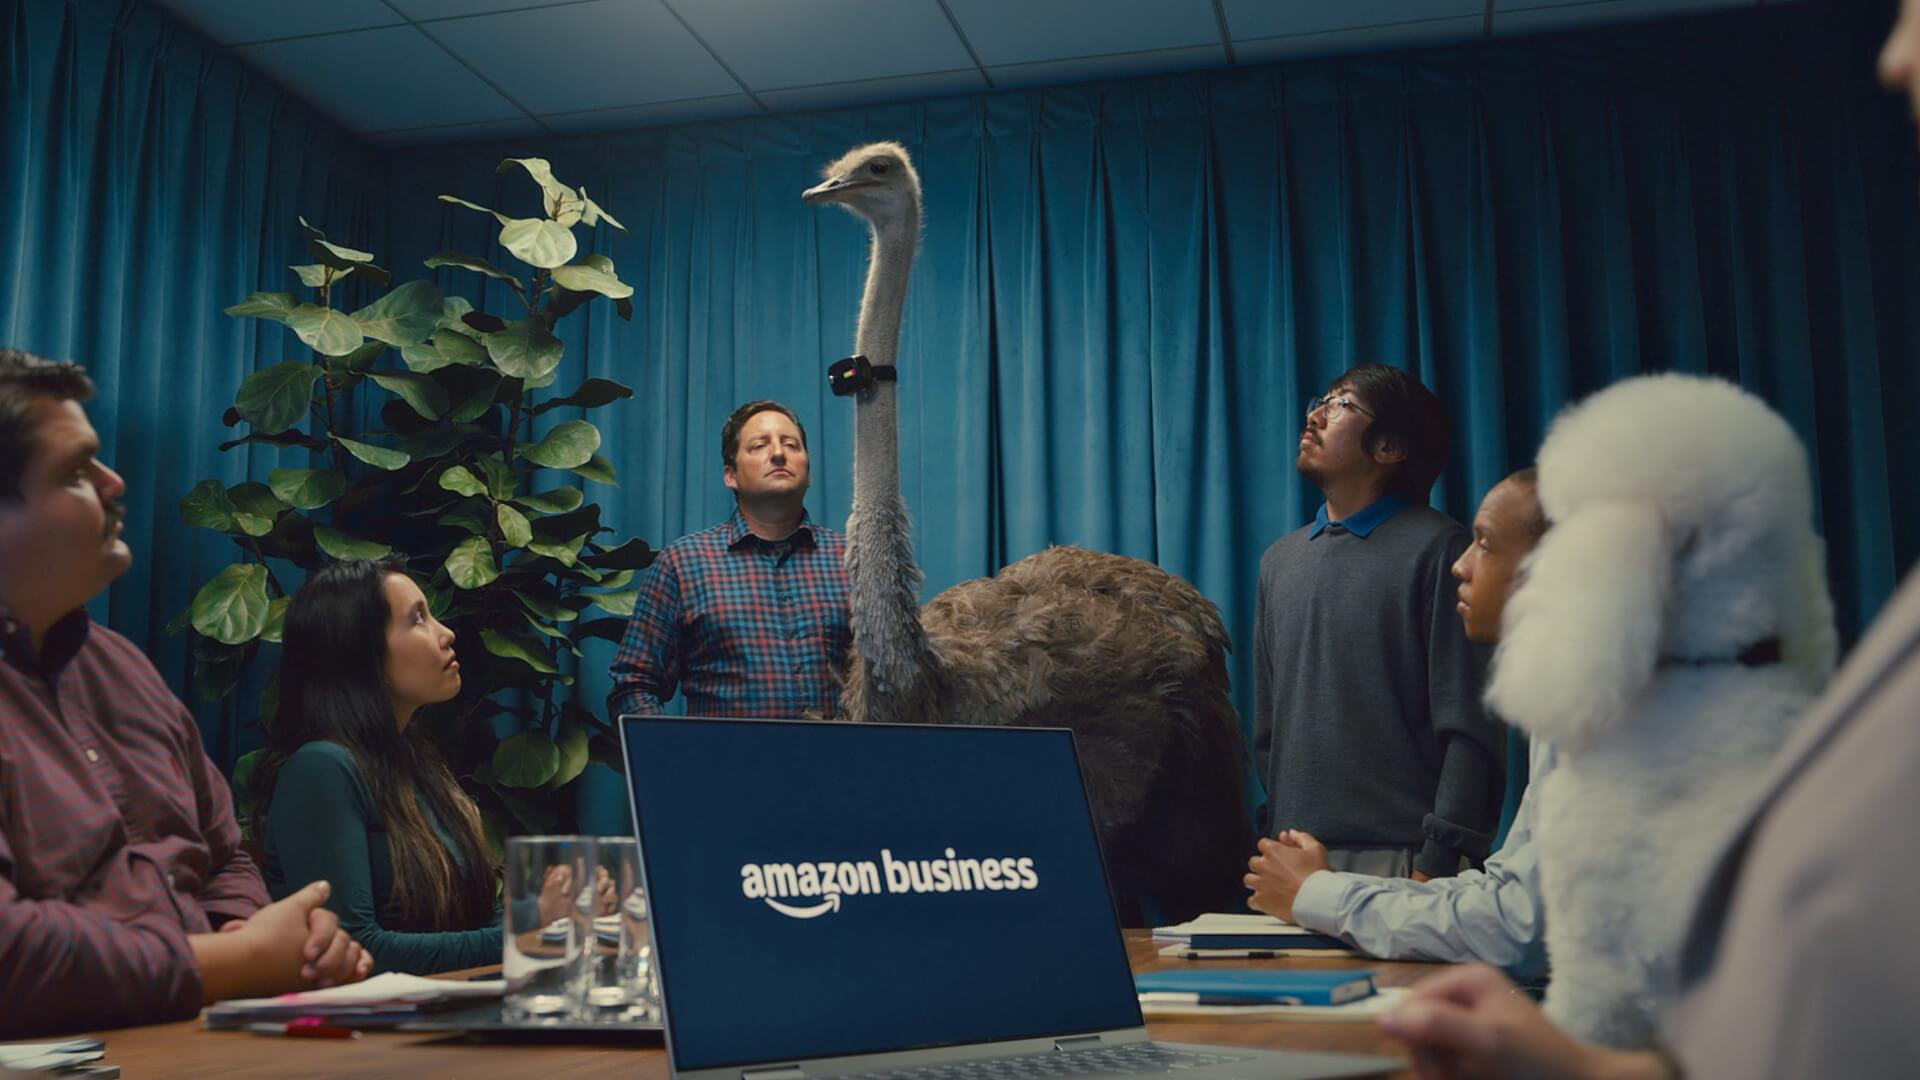 Amazon Business: Buy smarter. Dream bigger.